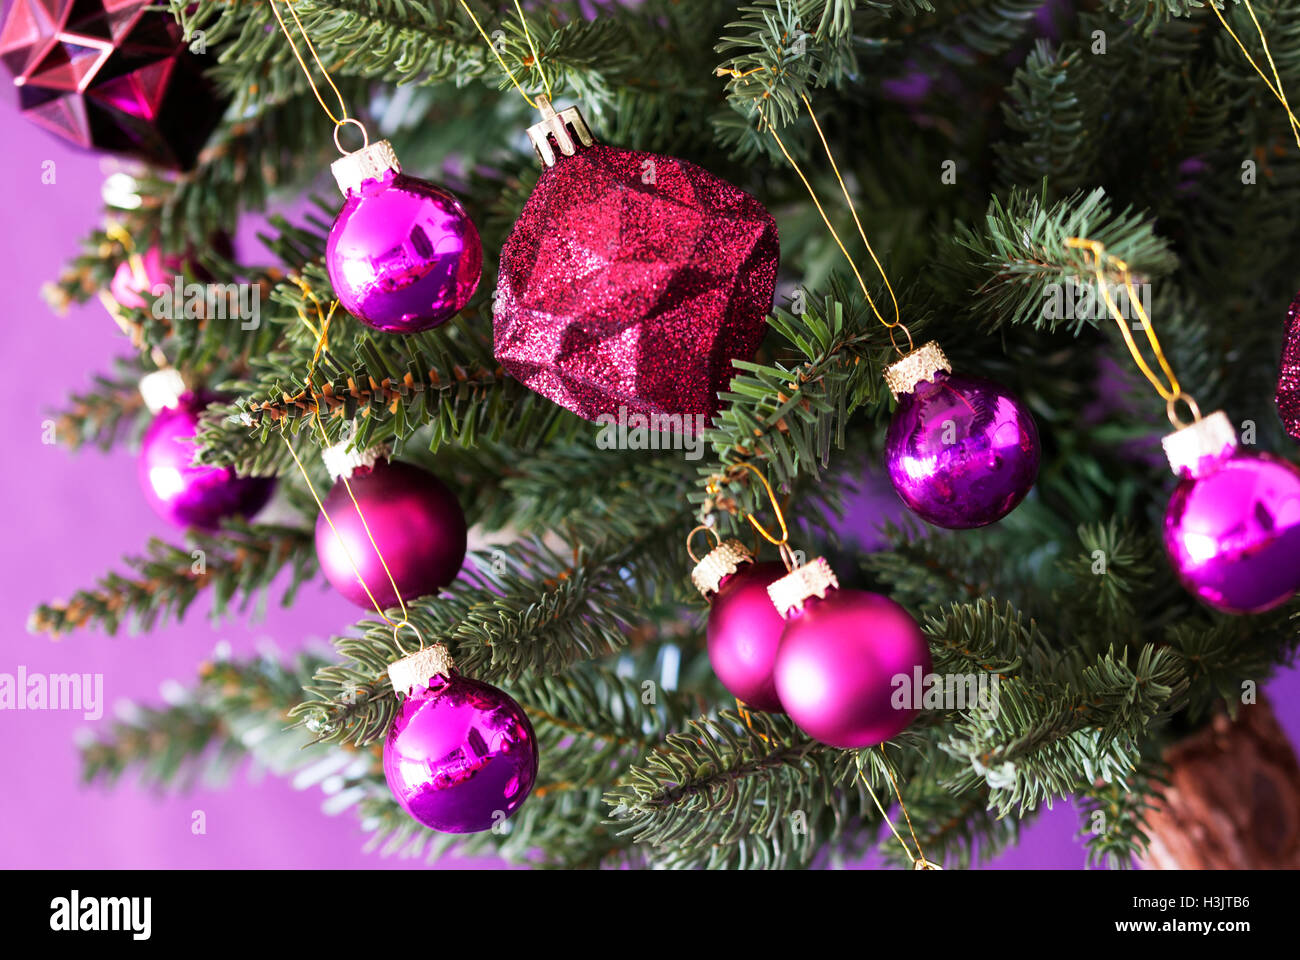 Blurry Rose Quartz Chrismas Balls On Tree Stock Photo